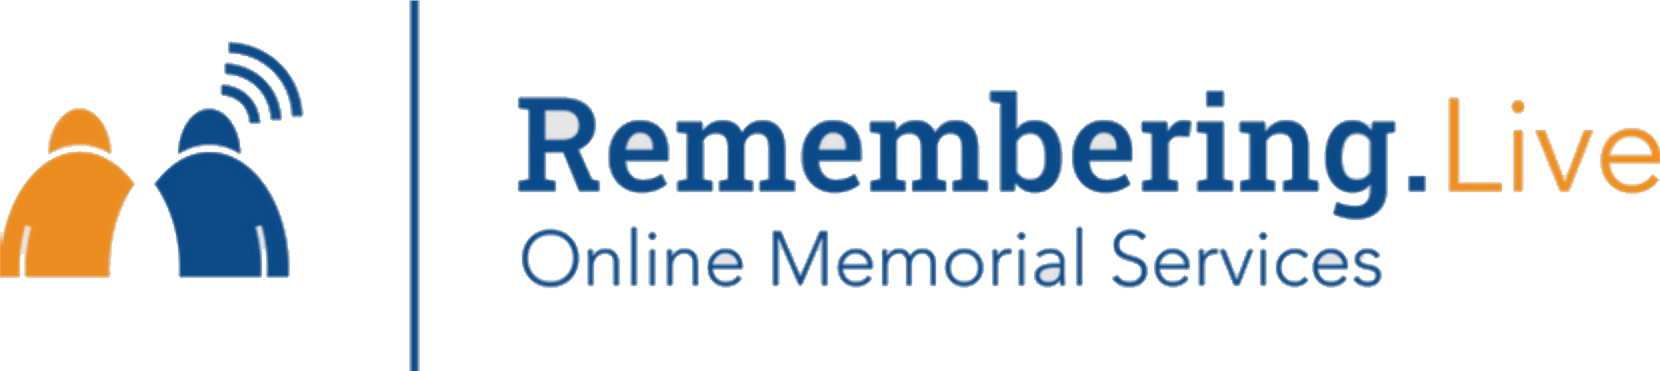 Remembering.Live Logo